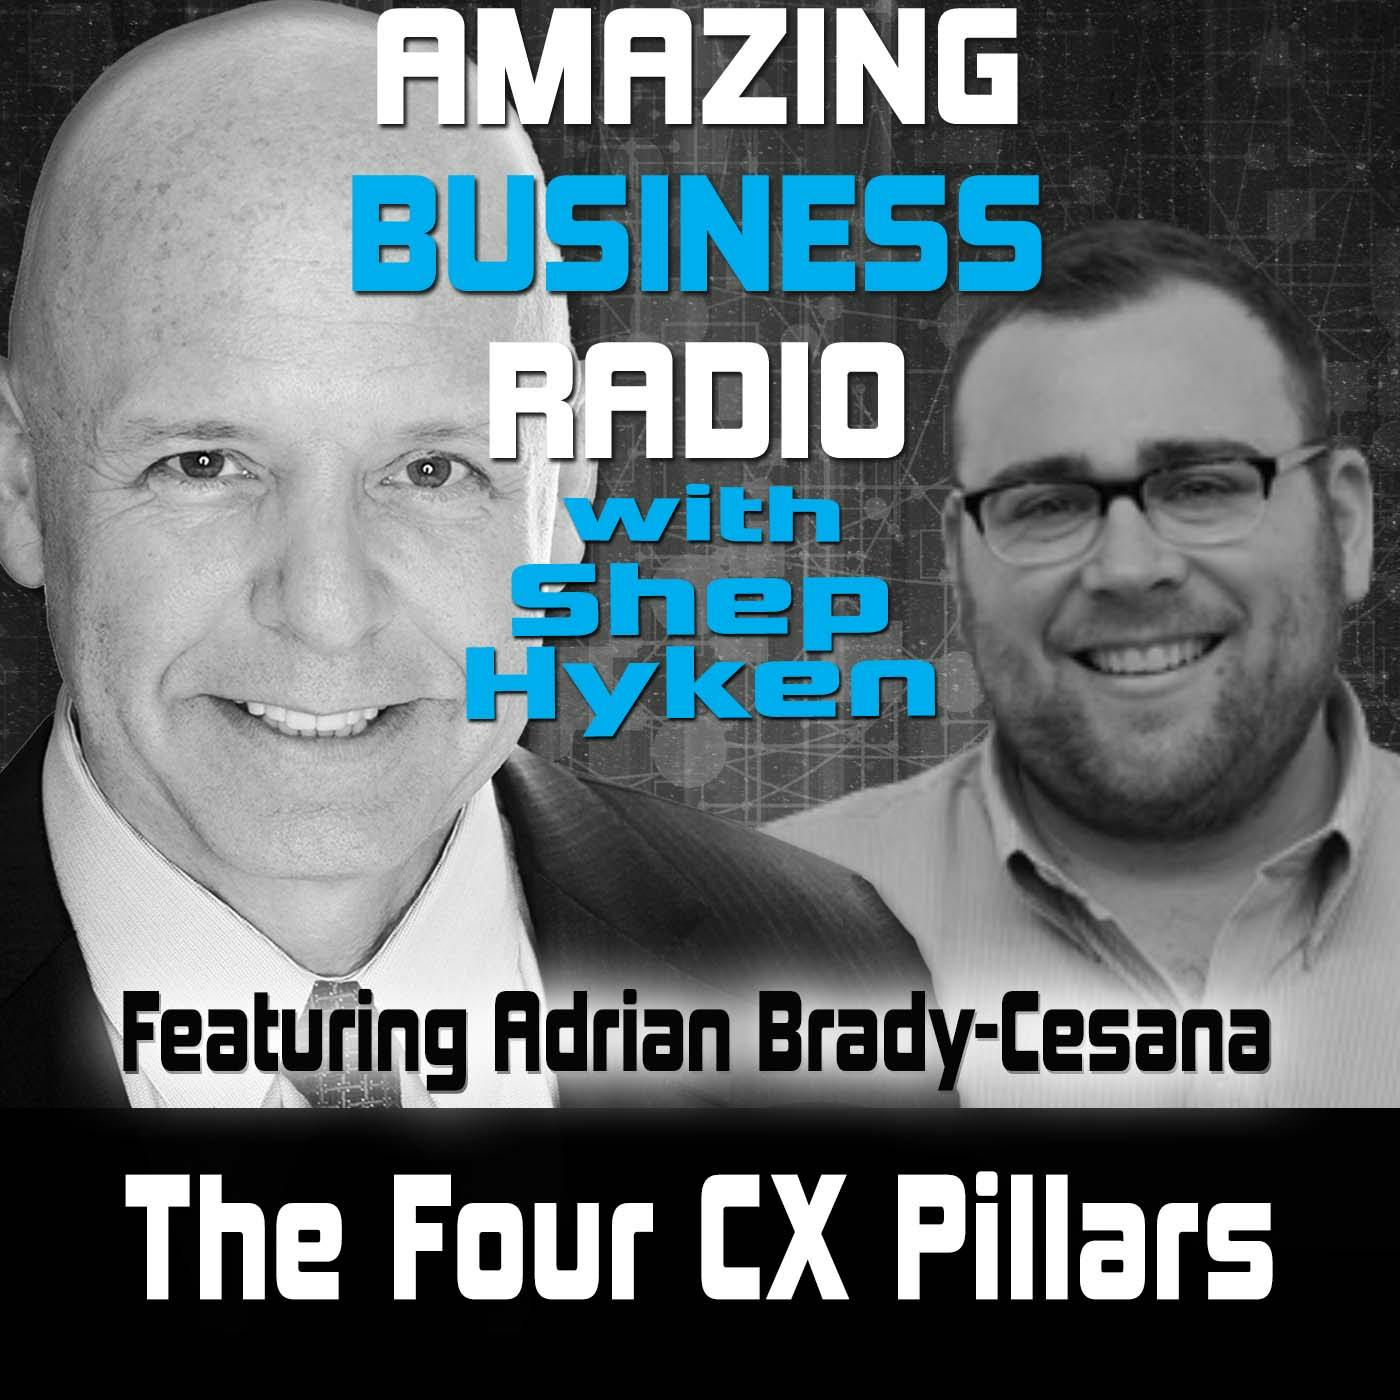 The Four CX Pillars Featuring Adrian Brady-Cesana